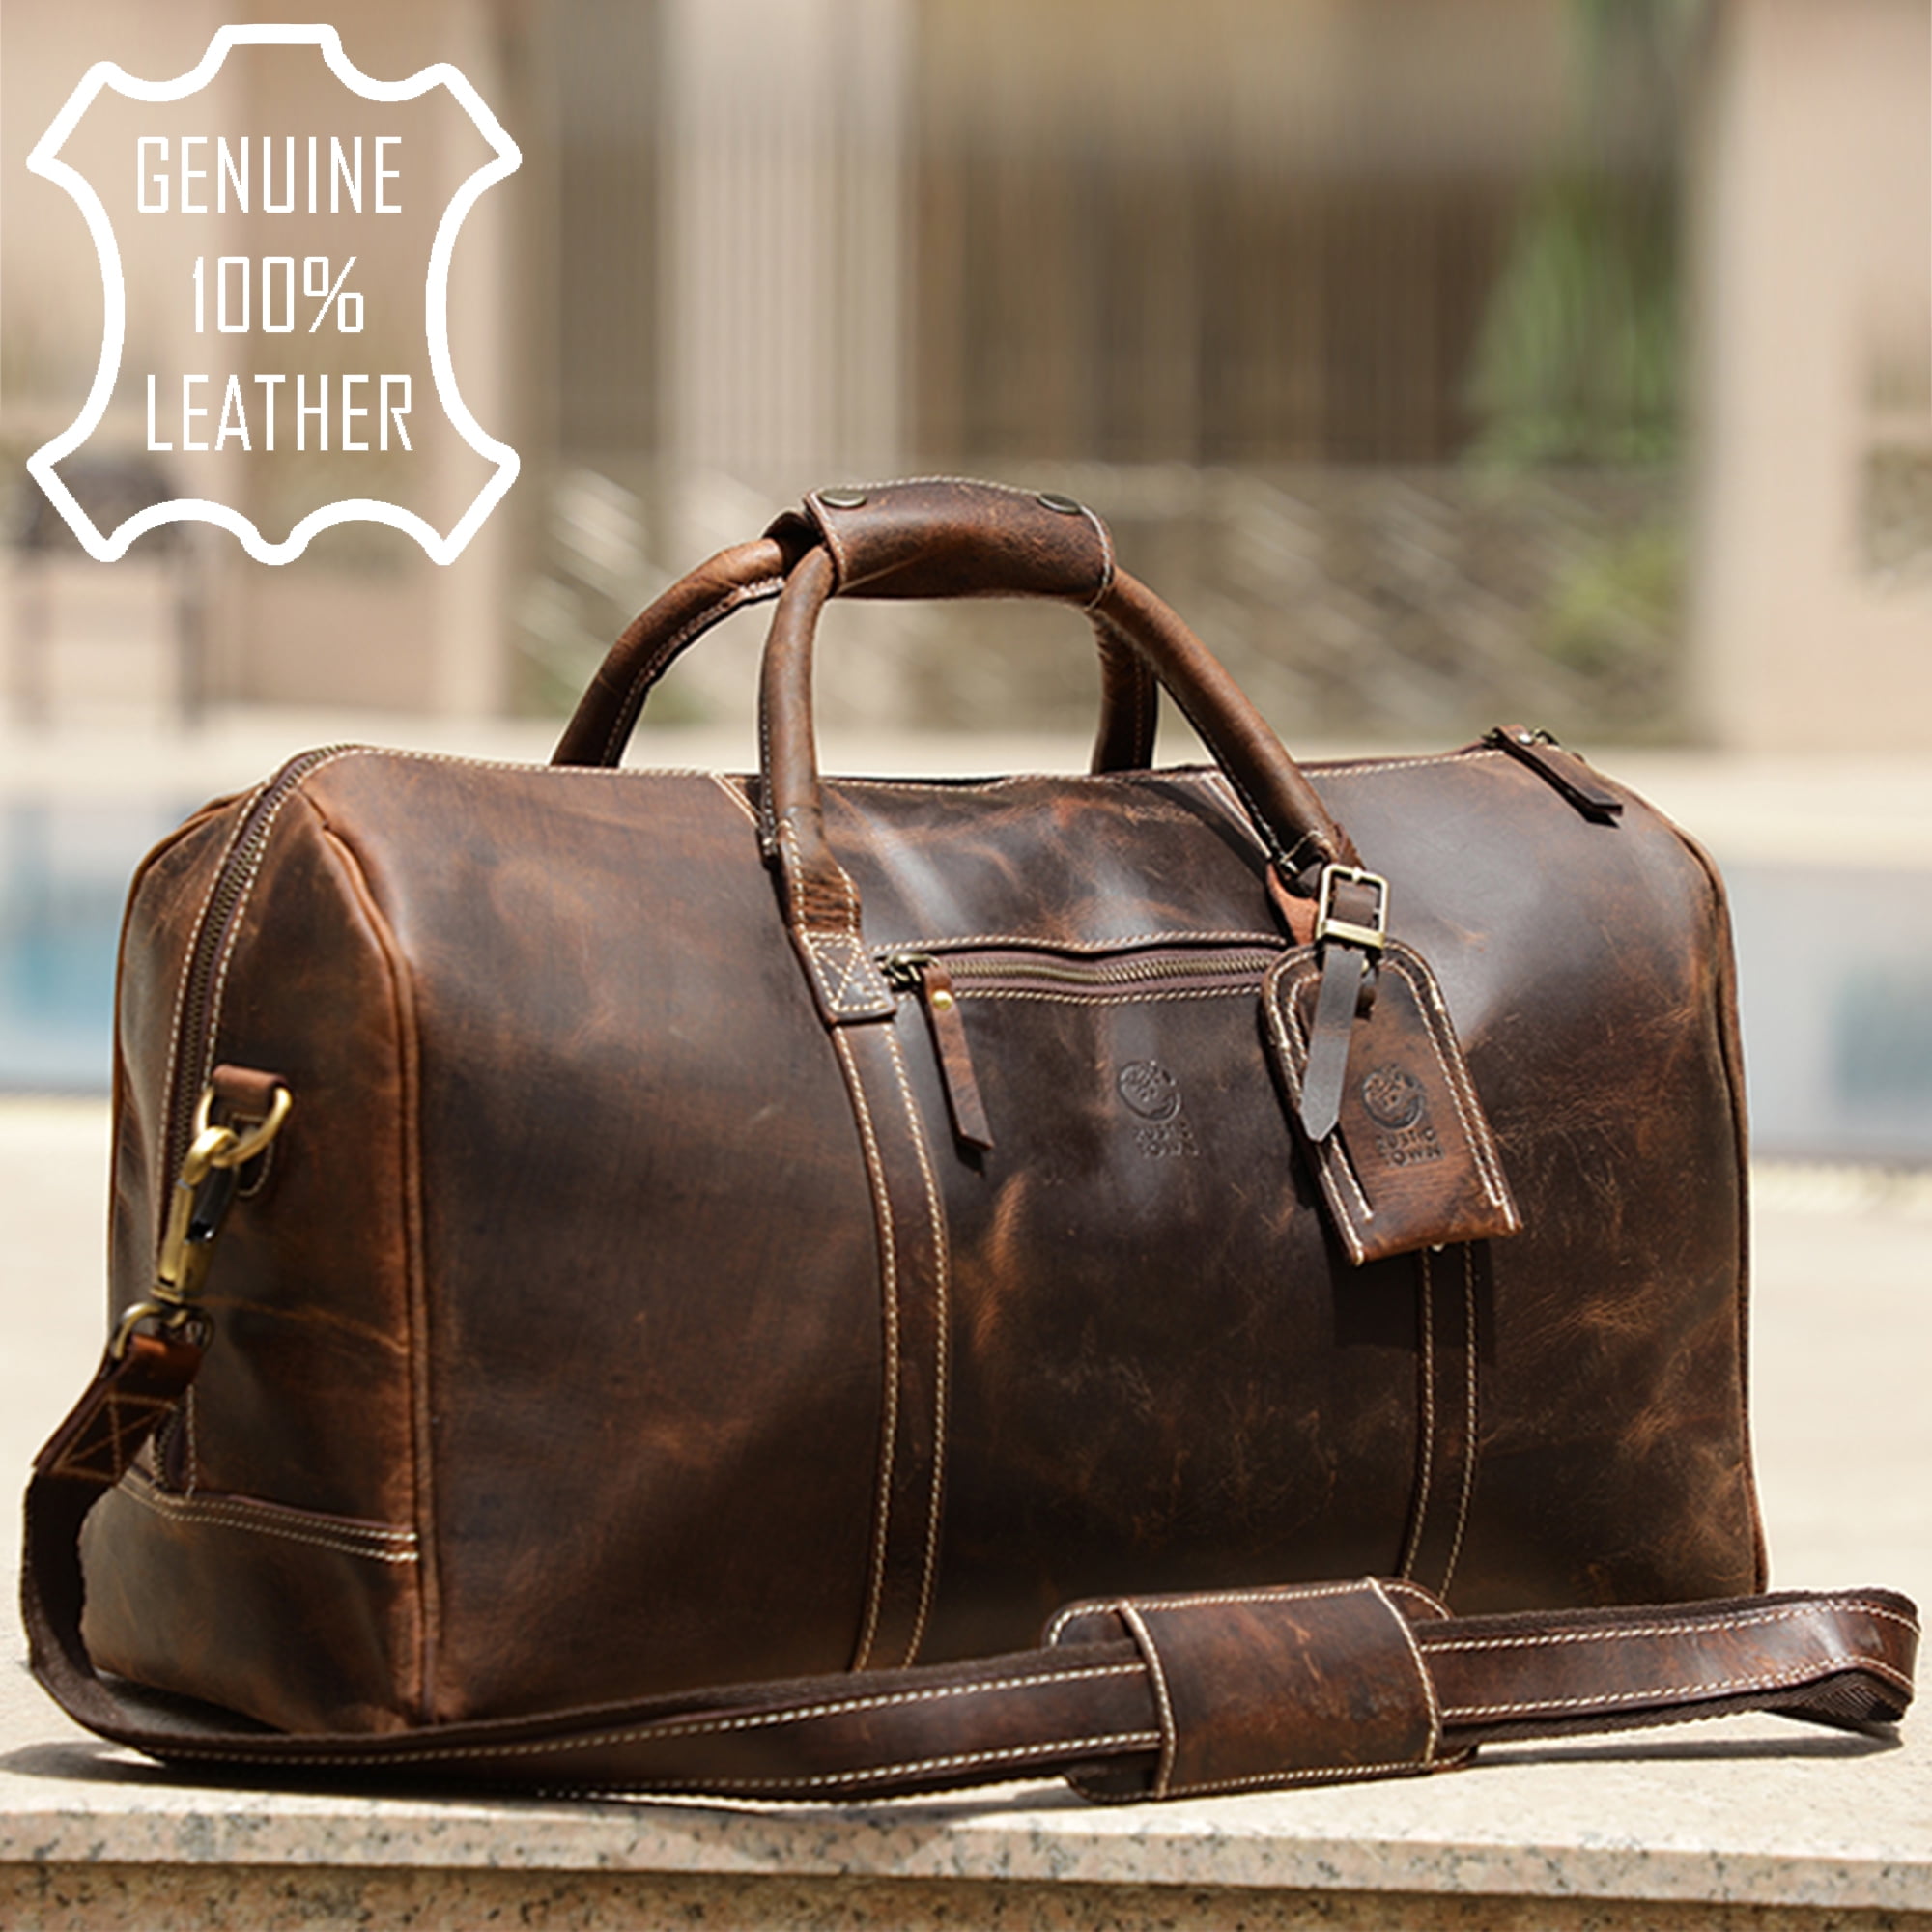 Men's genuine Leather large vintage duffle travel gym weekend overnight bag 25" 